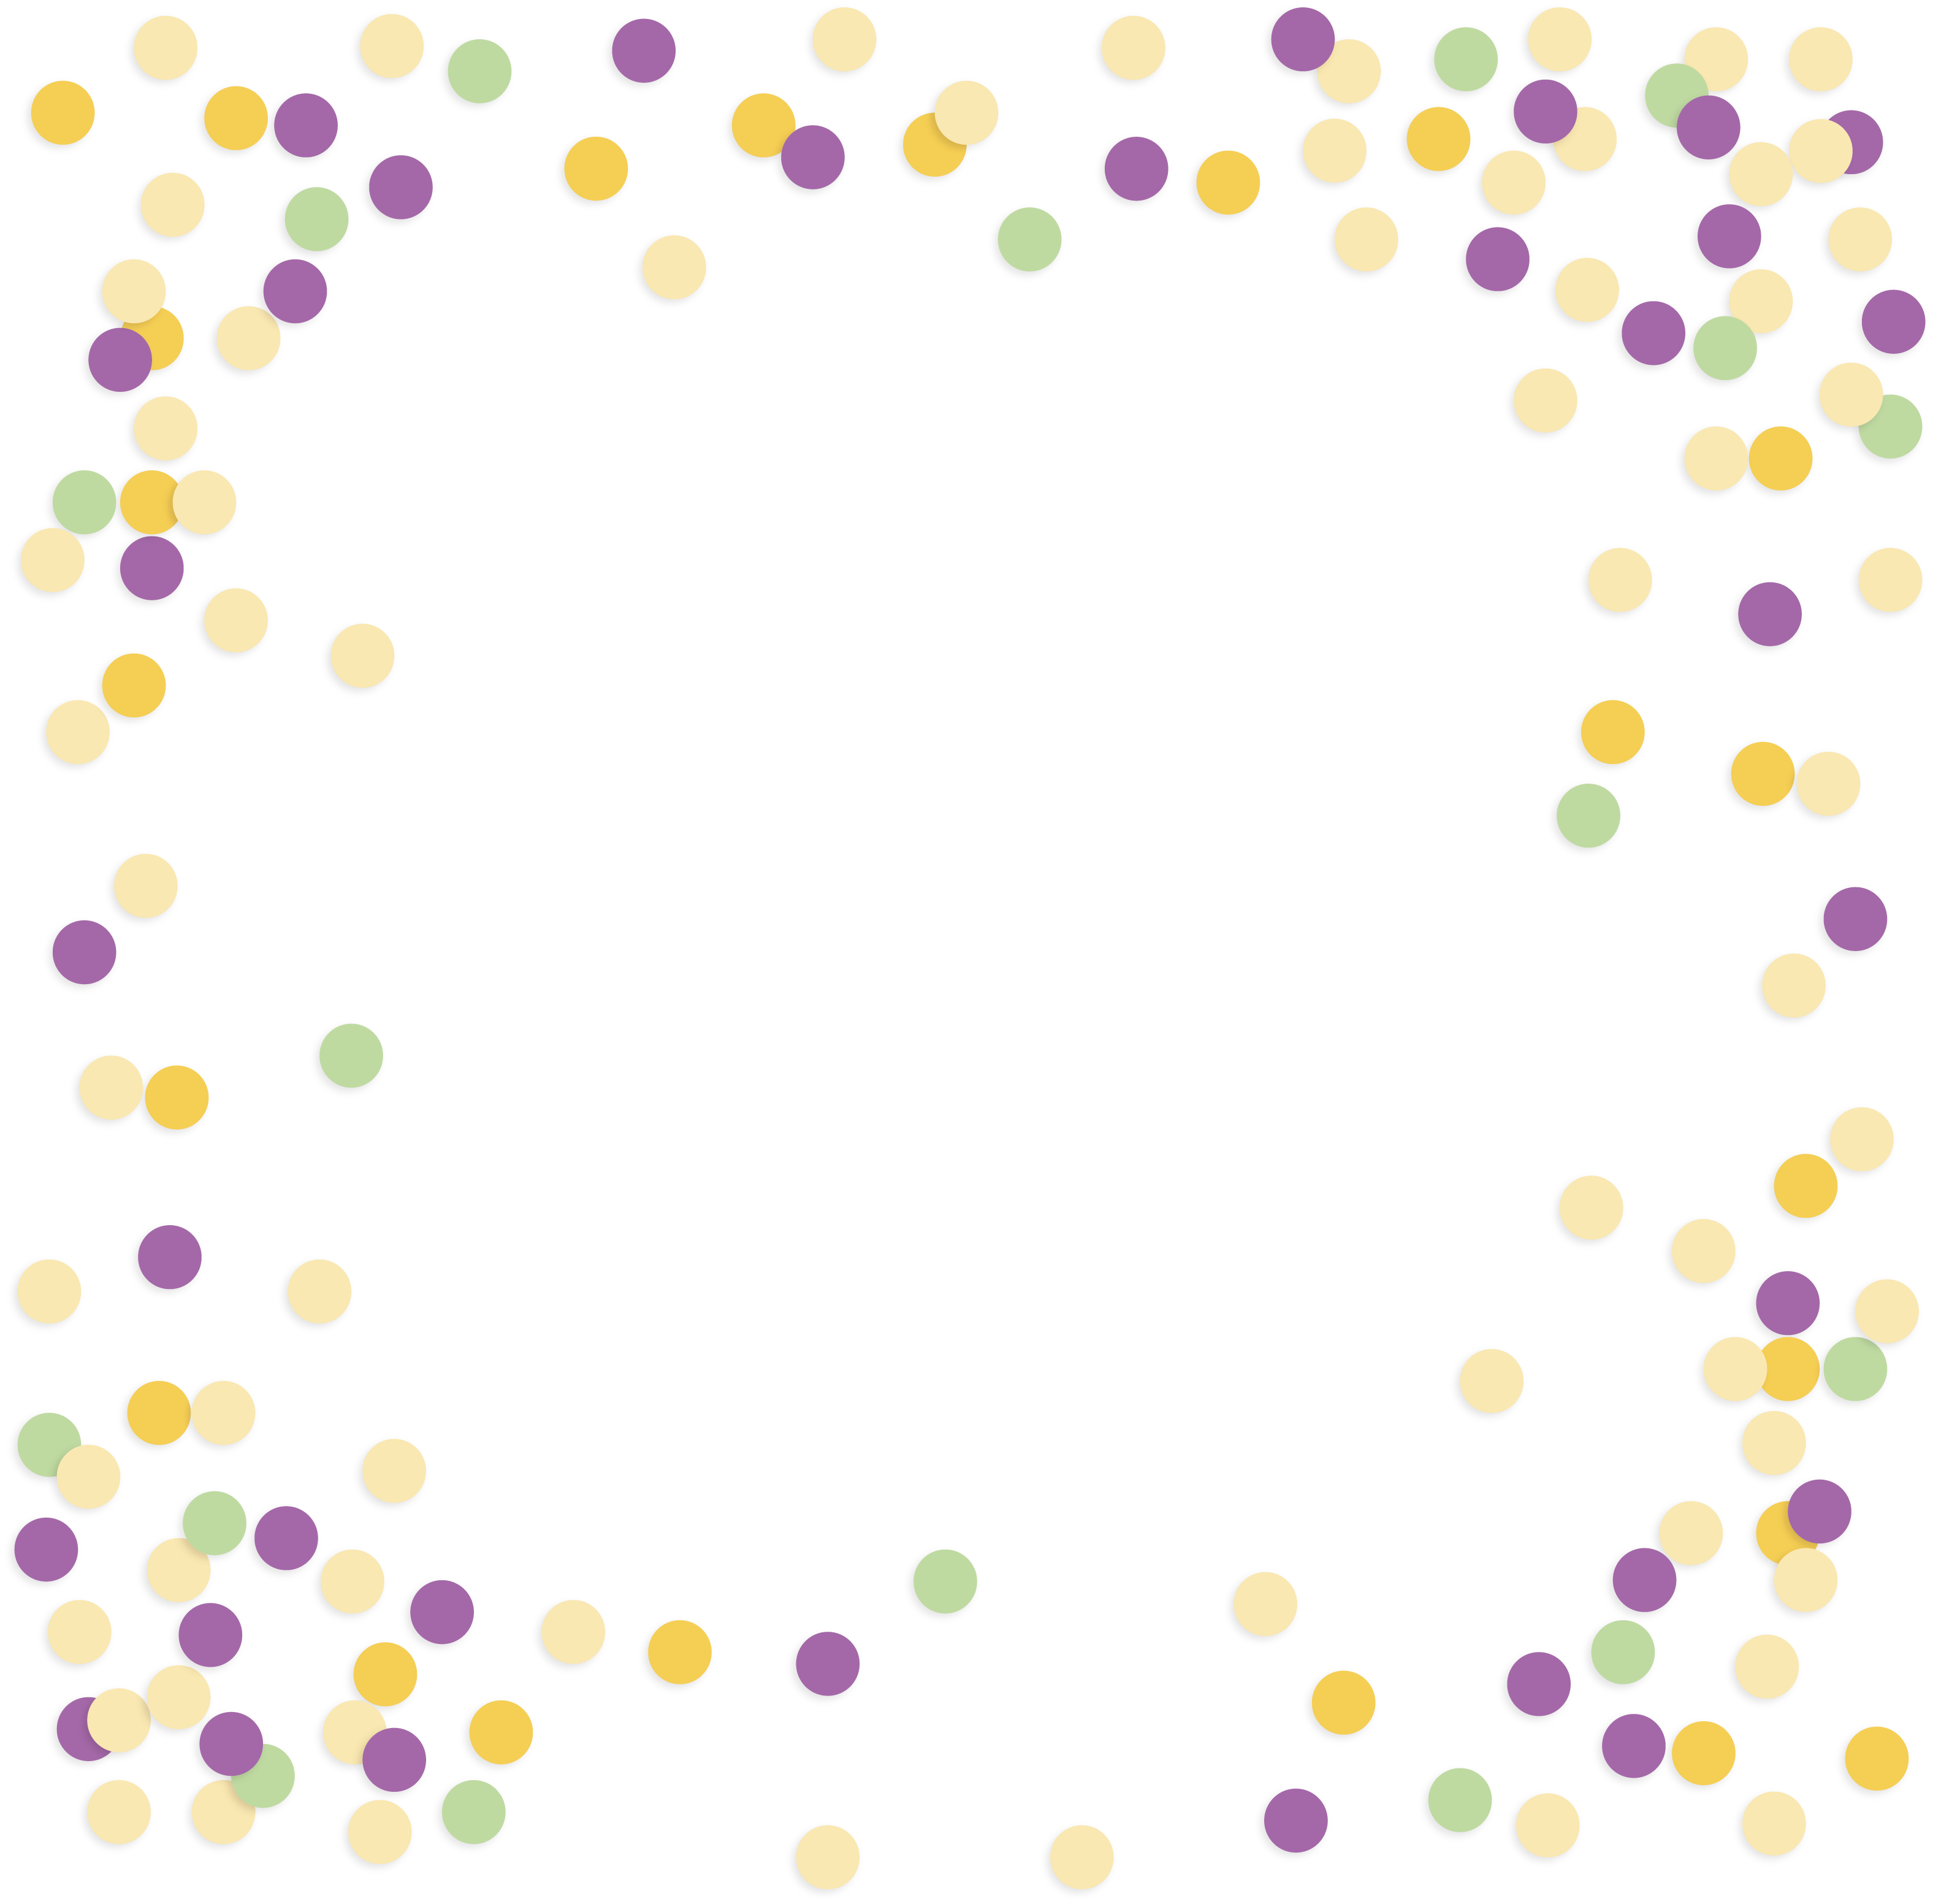 Polka Dot Pattern Clip Art